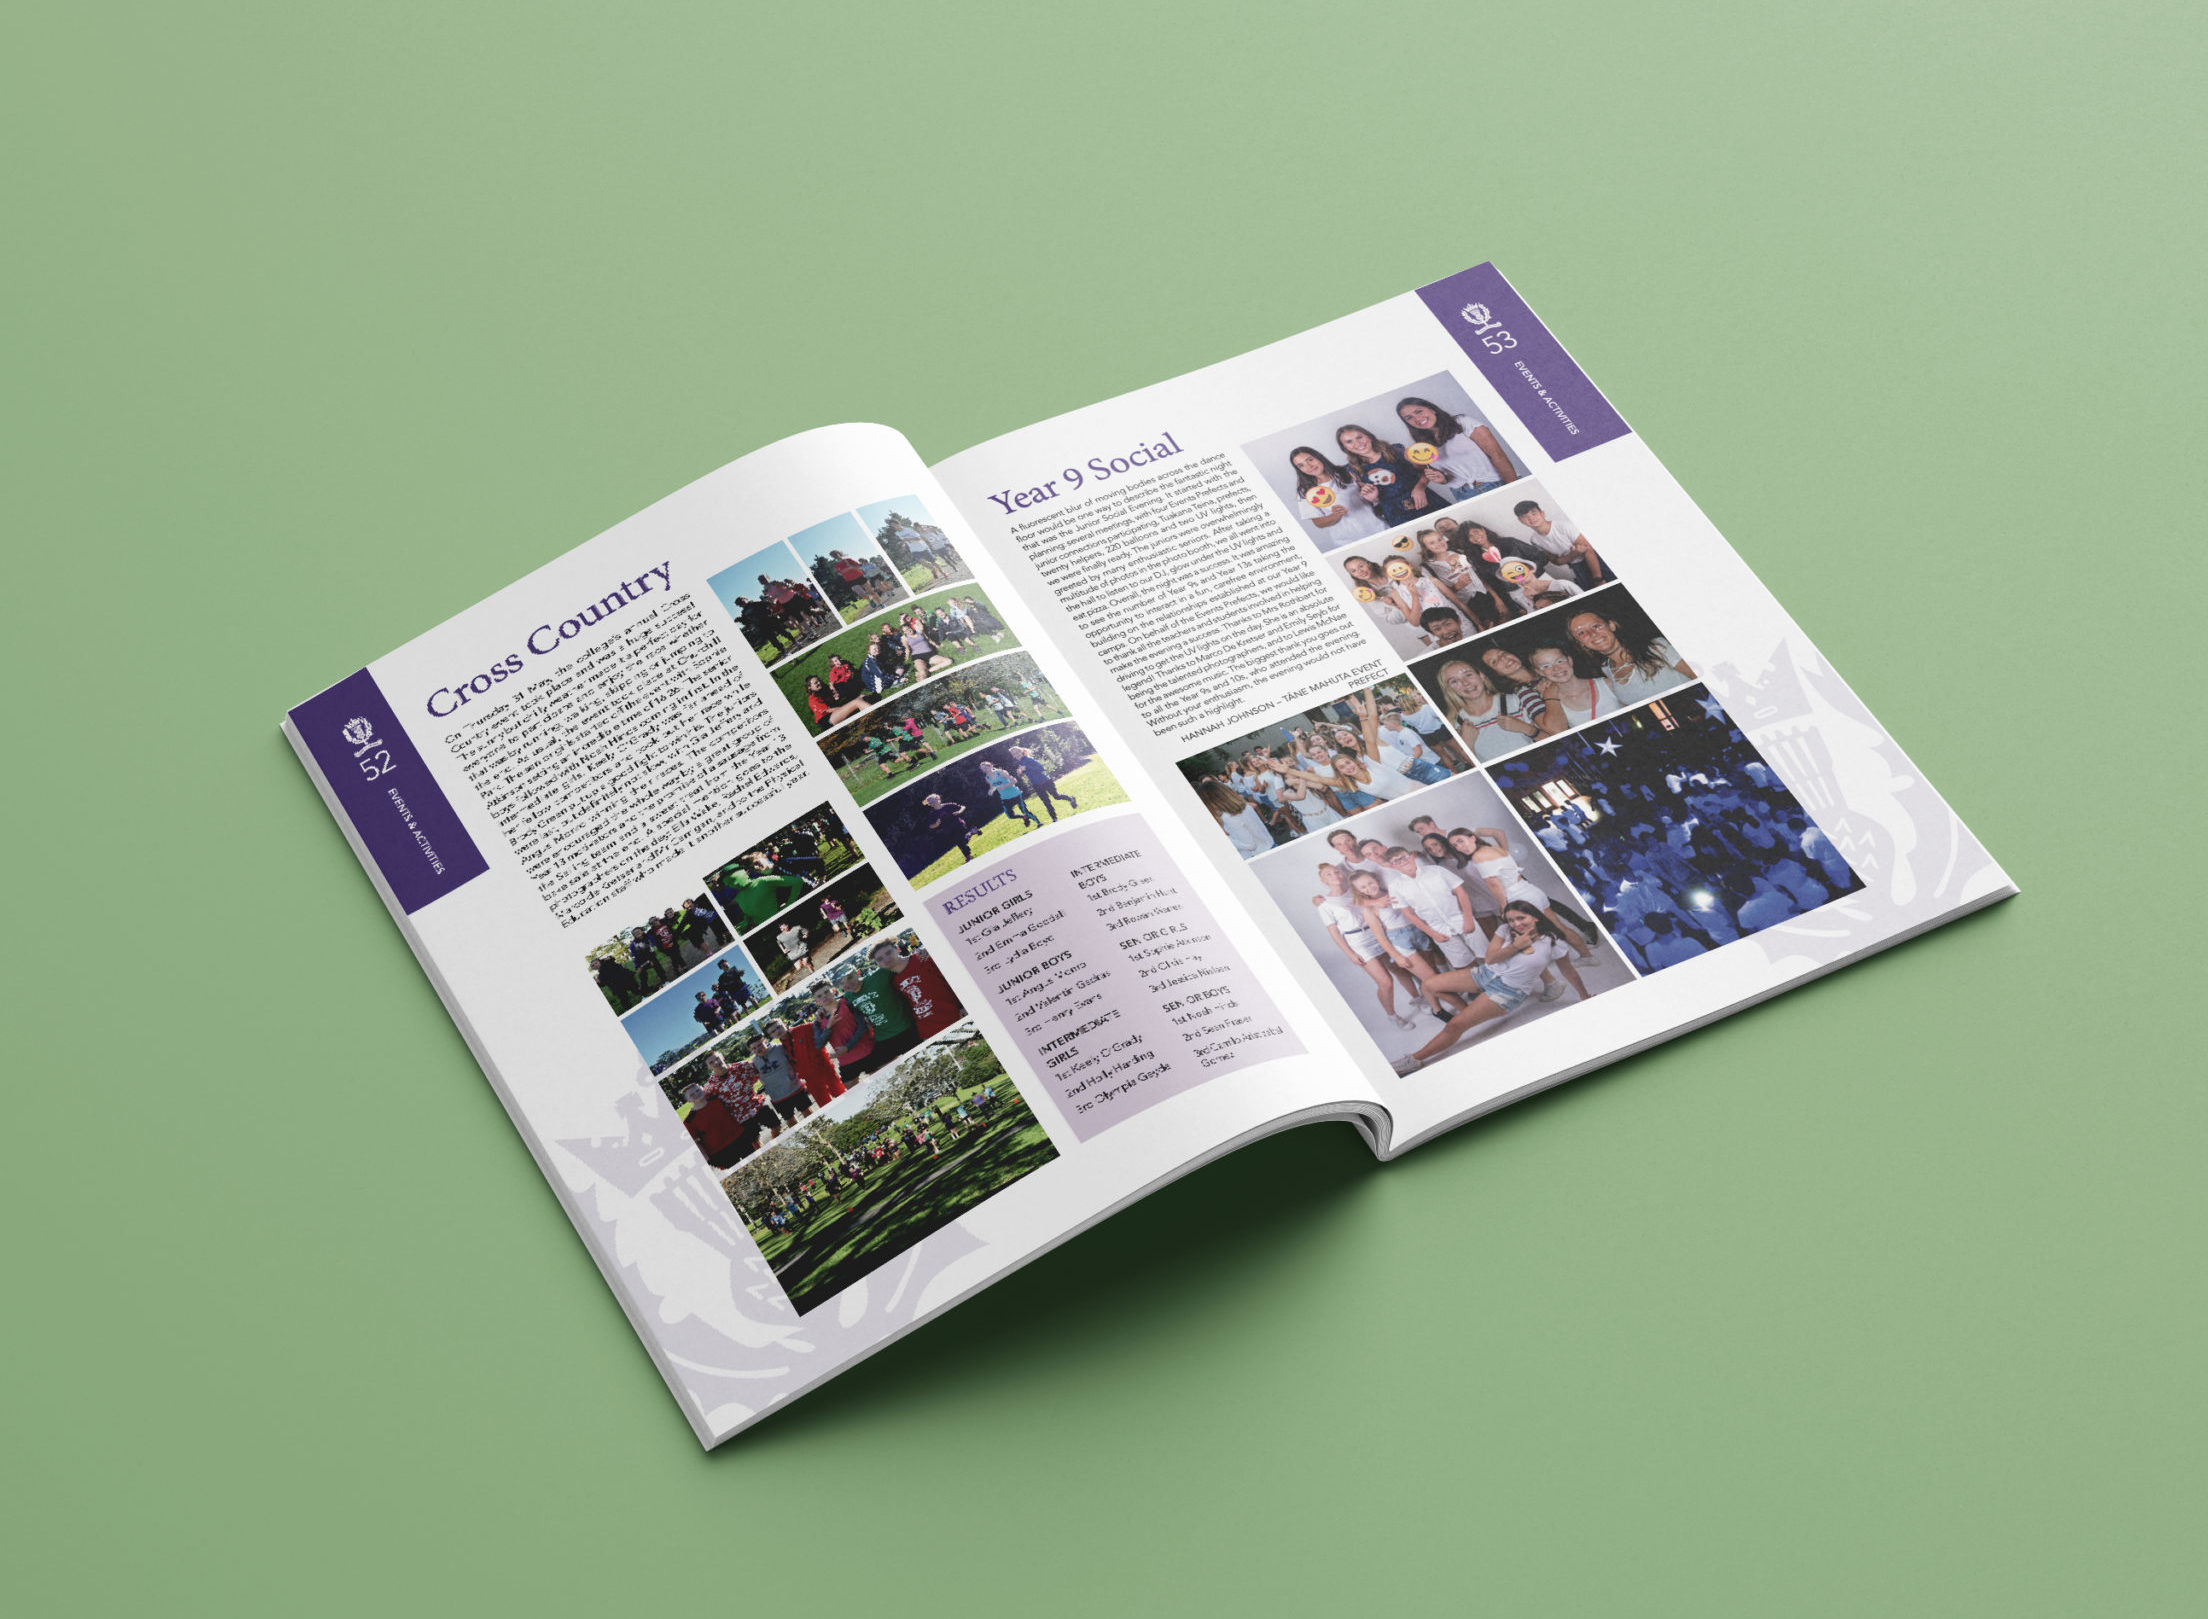 Royal purple coloured school yearbook spread